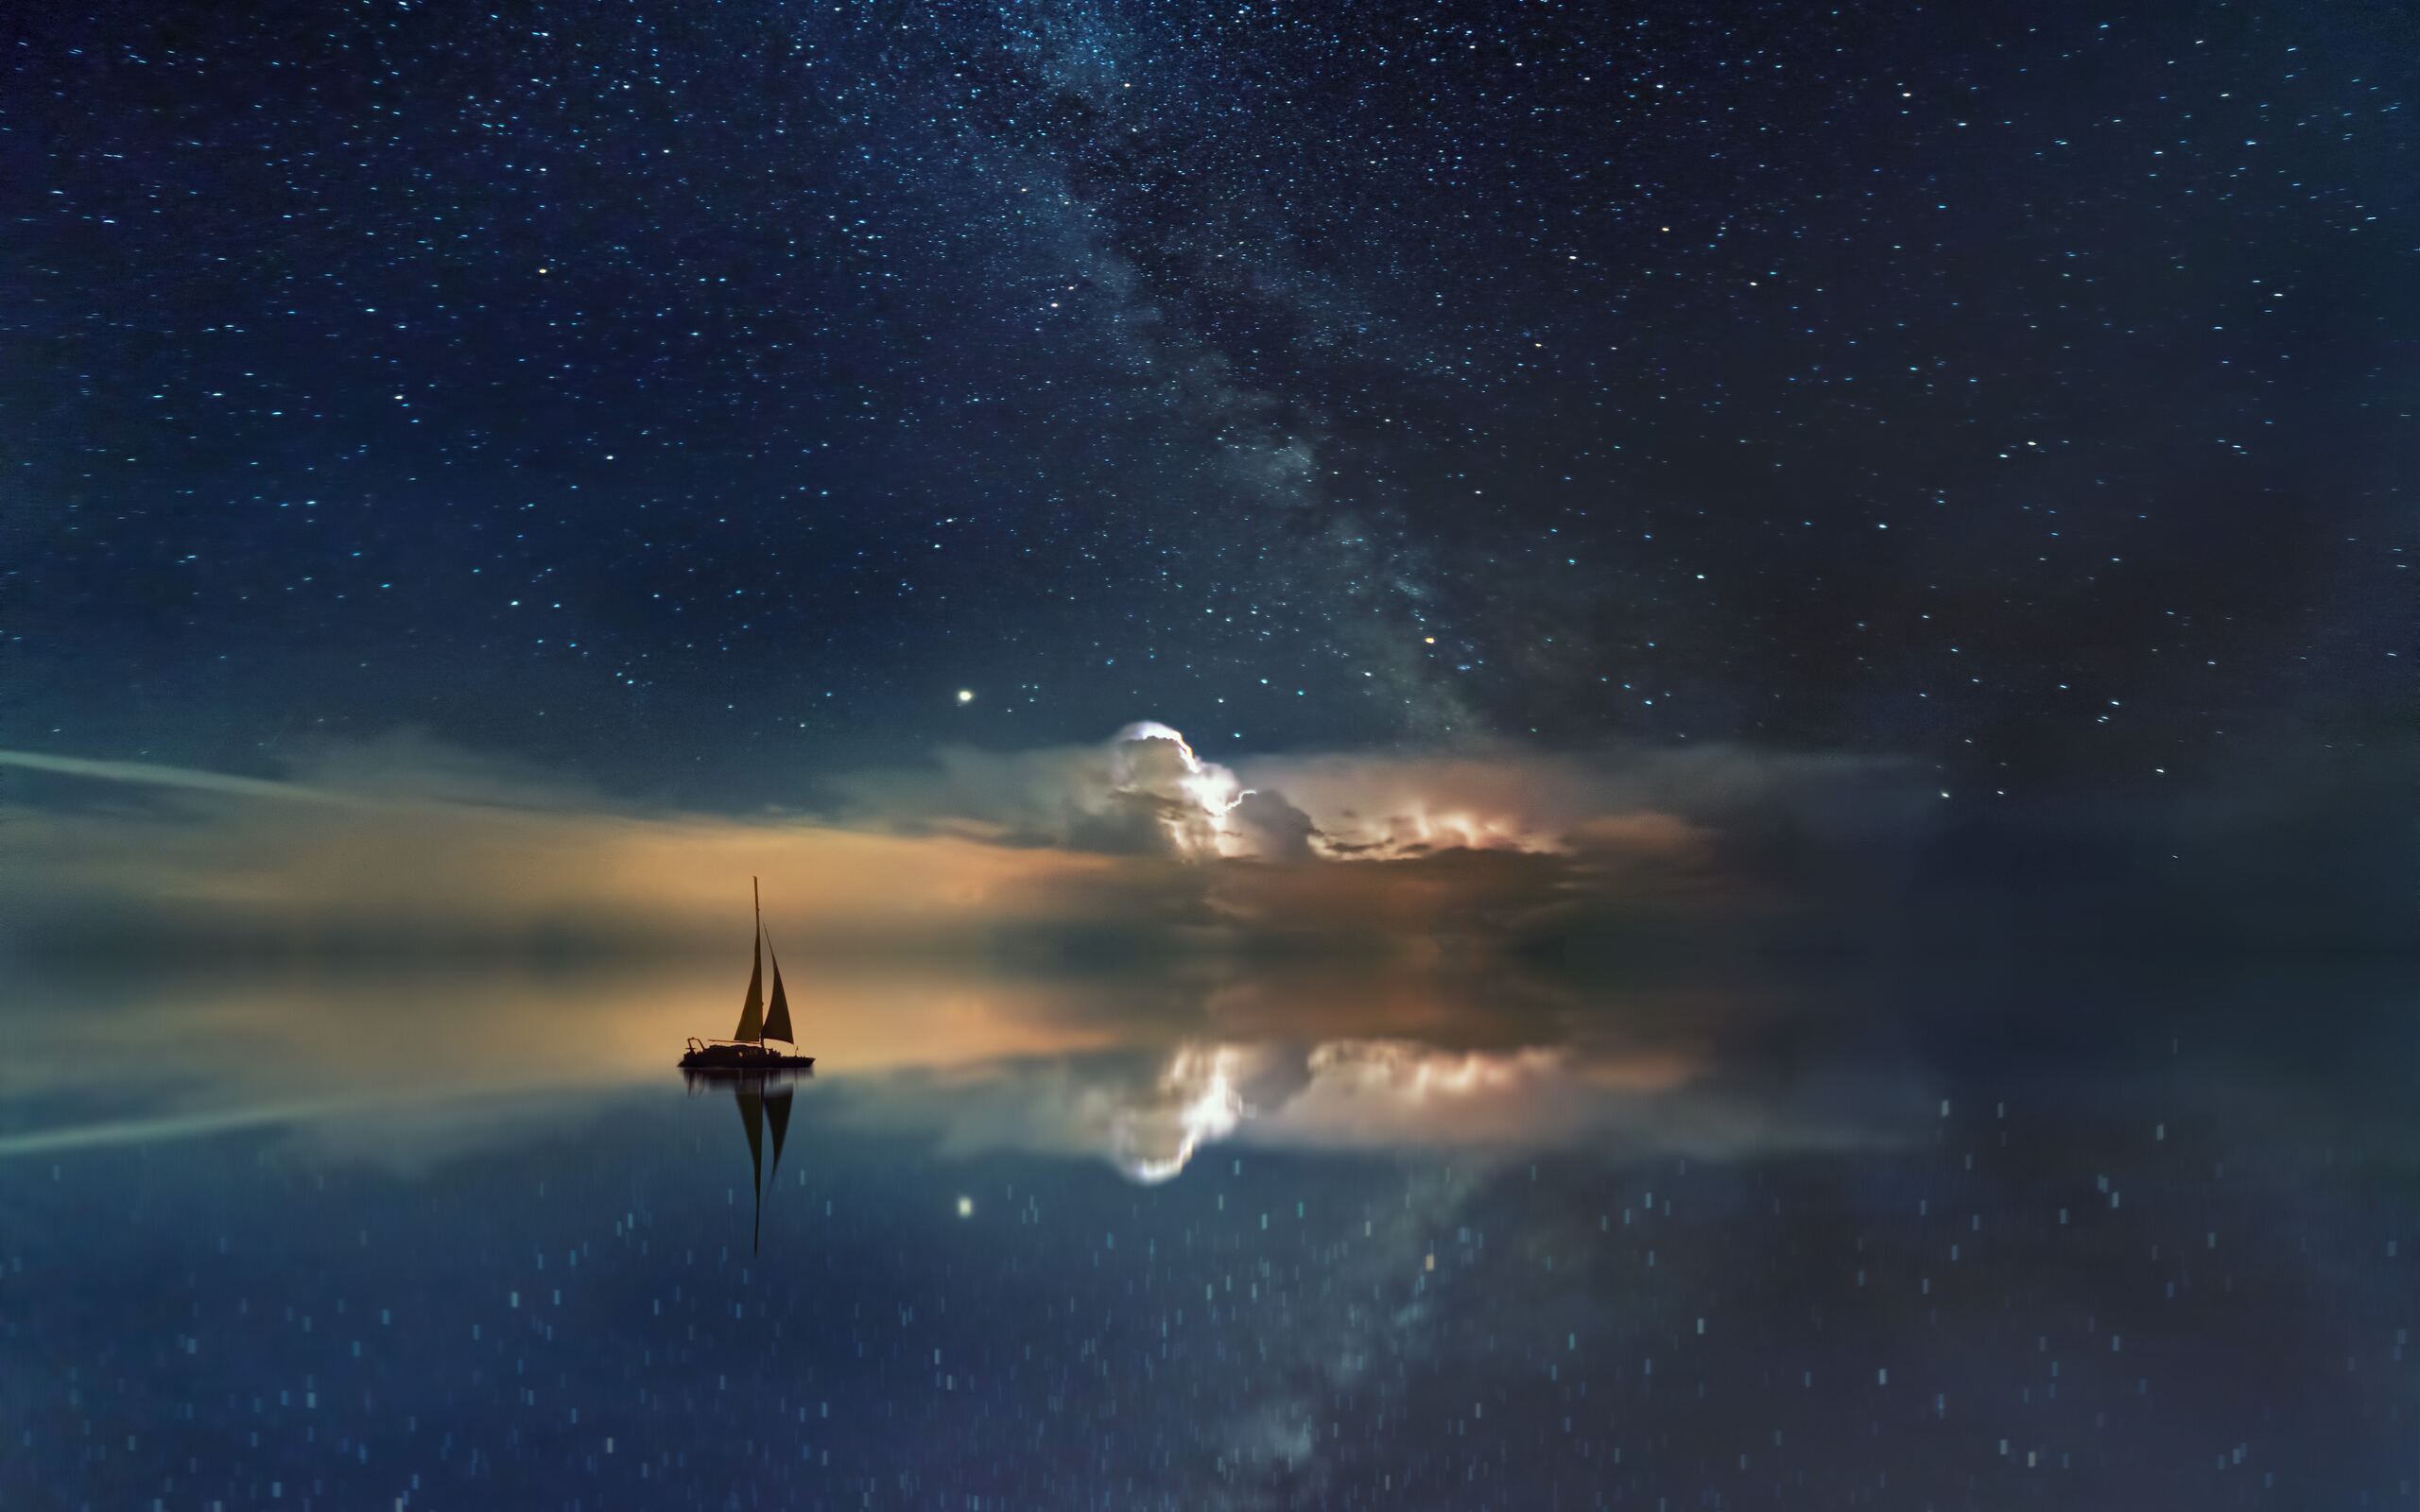 lake-mirror-reflection-stars-boat-milky-way-5k-ha.jpg